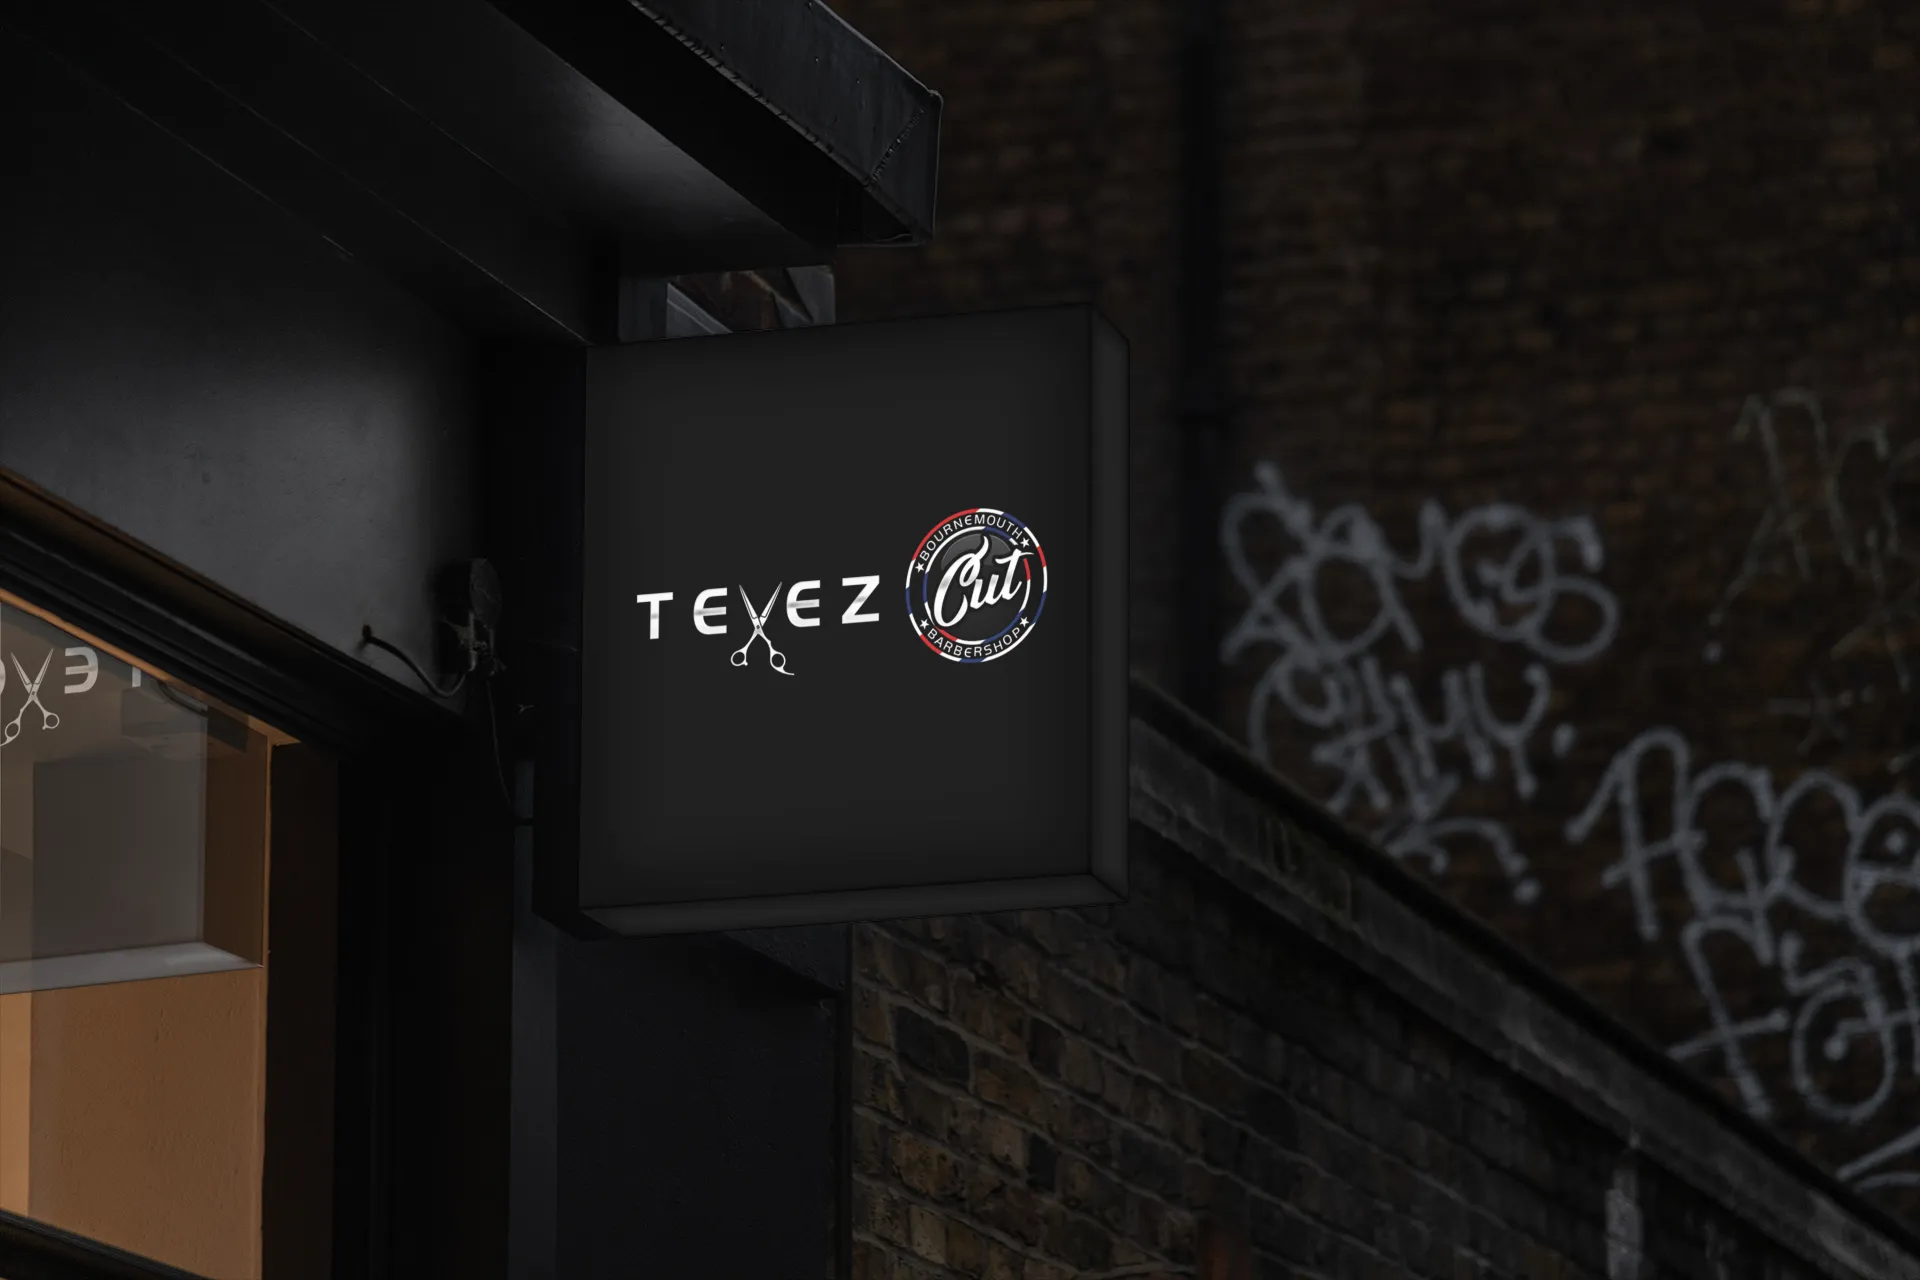 Side shop signn displaying the Tevez Cut Barbery Shop Logo Design